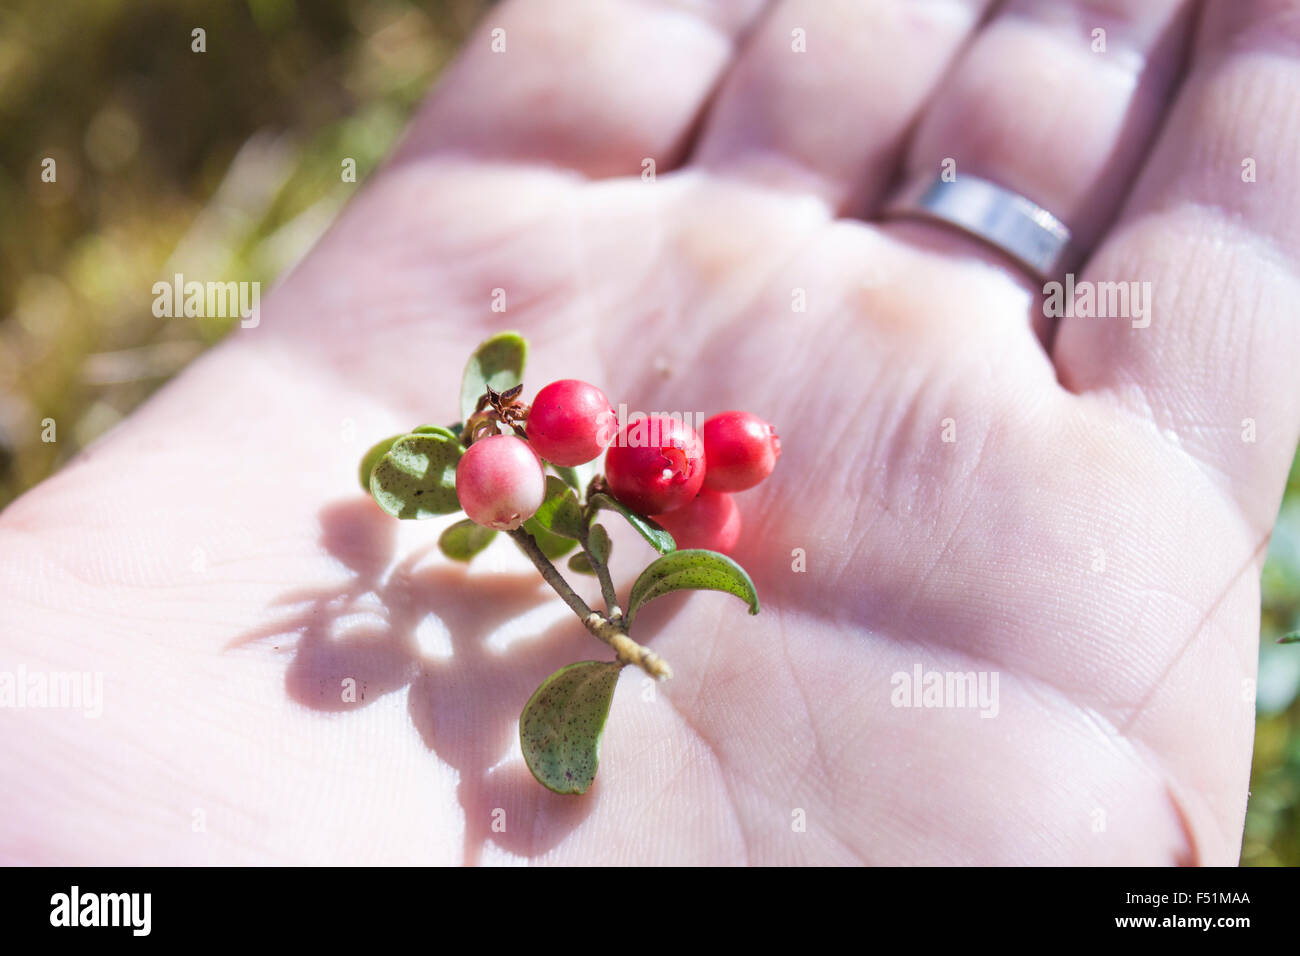 Red lingonberry, vaccinium vitis-idaea on a hand Stock Photo